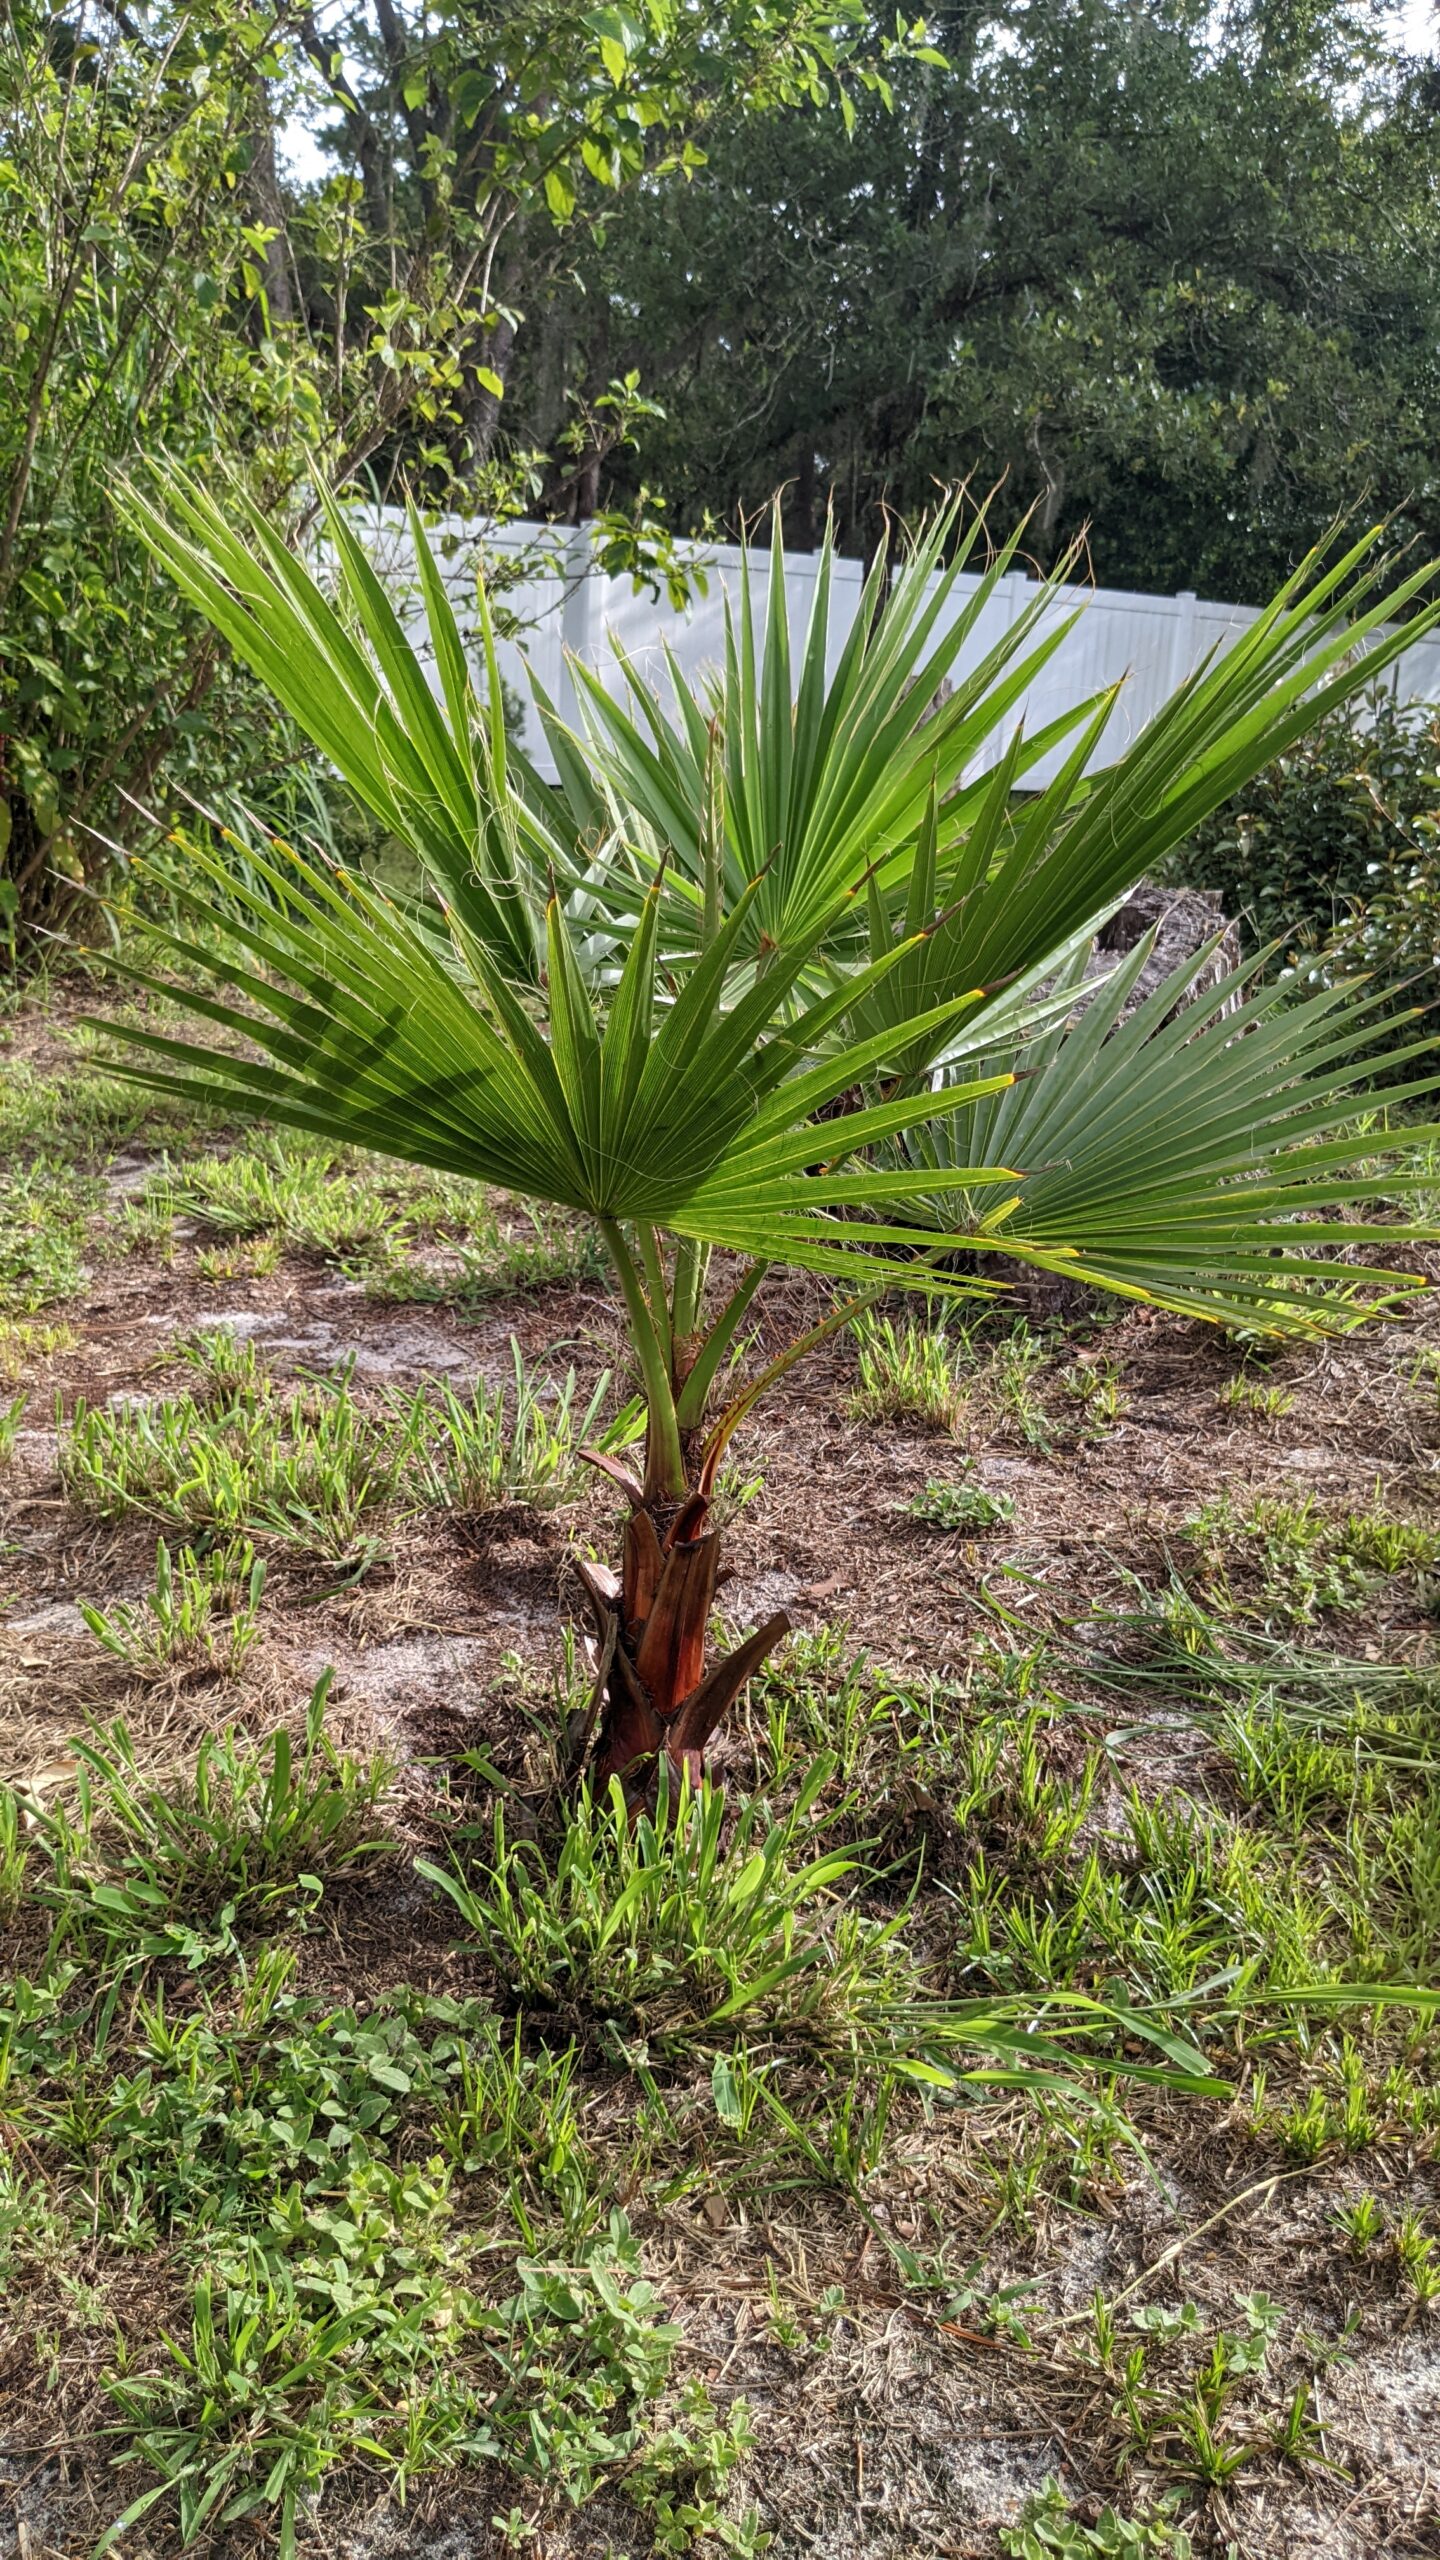 washingtonia palm tree